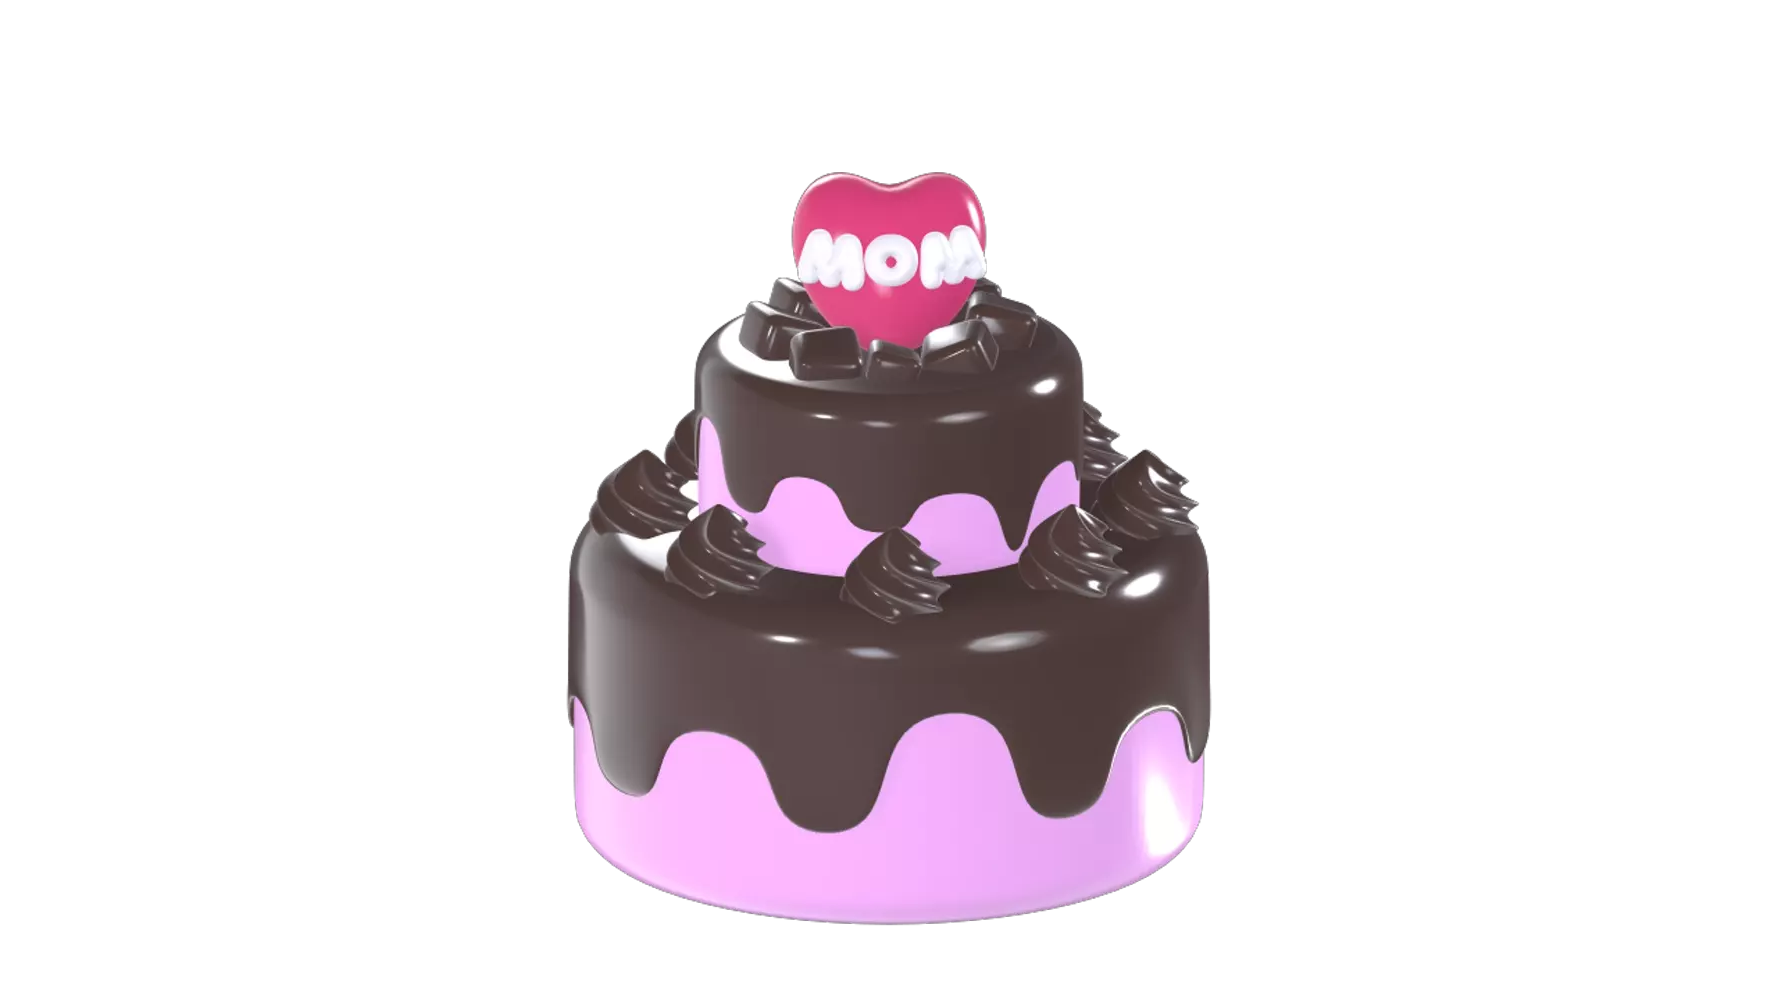 Mom Cake  3D Graphic